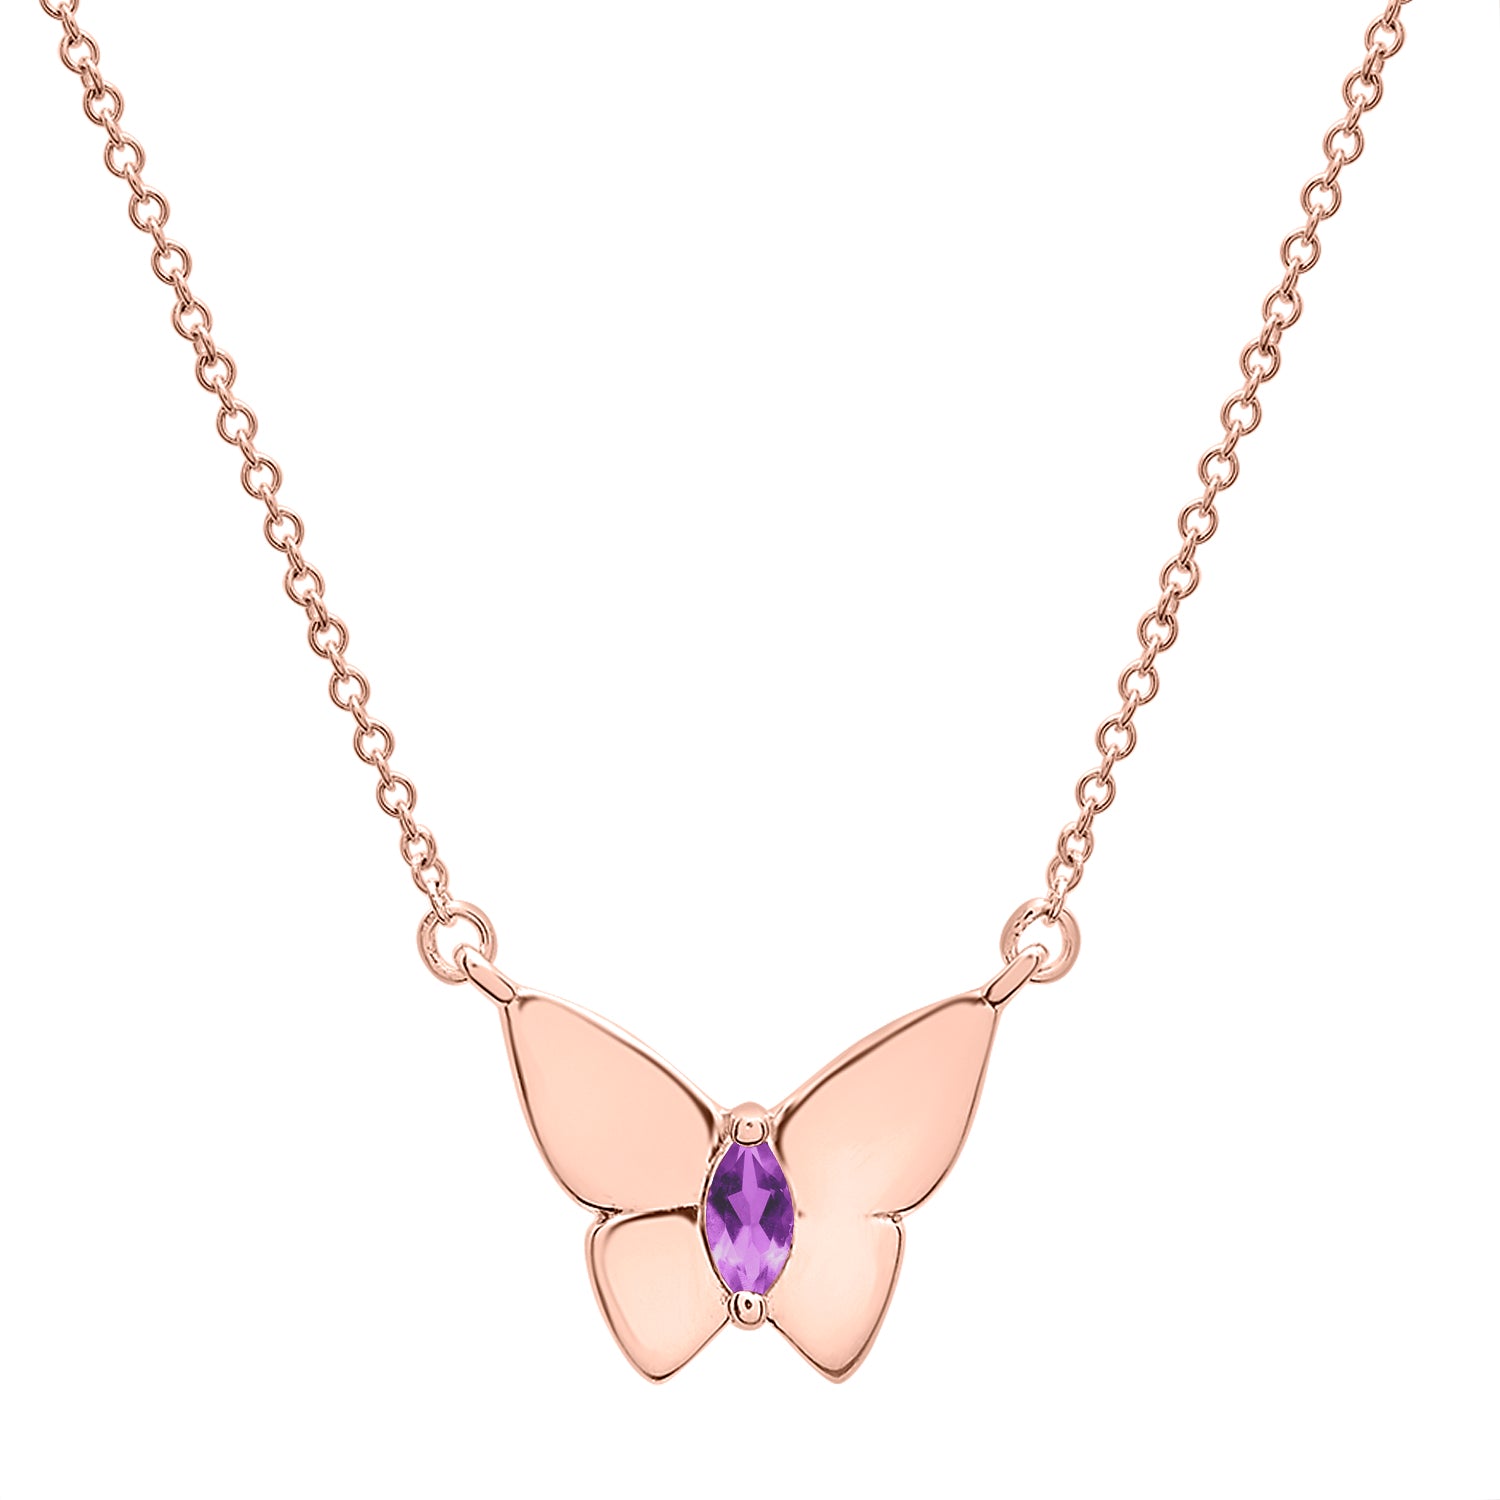 Butterfly Birthstone Necklace in Dark Pink Stone